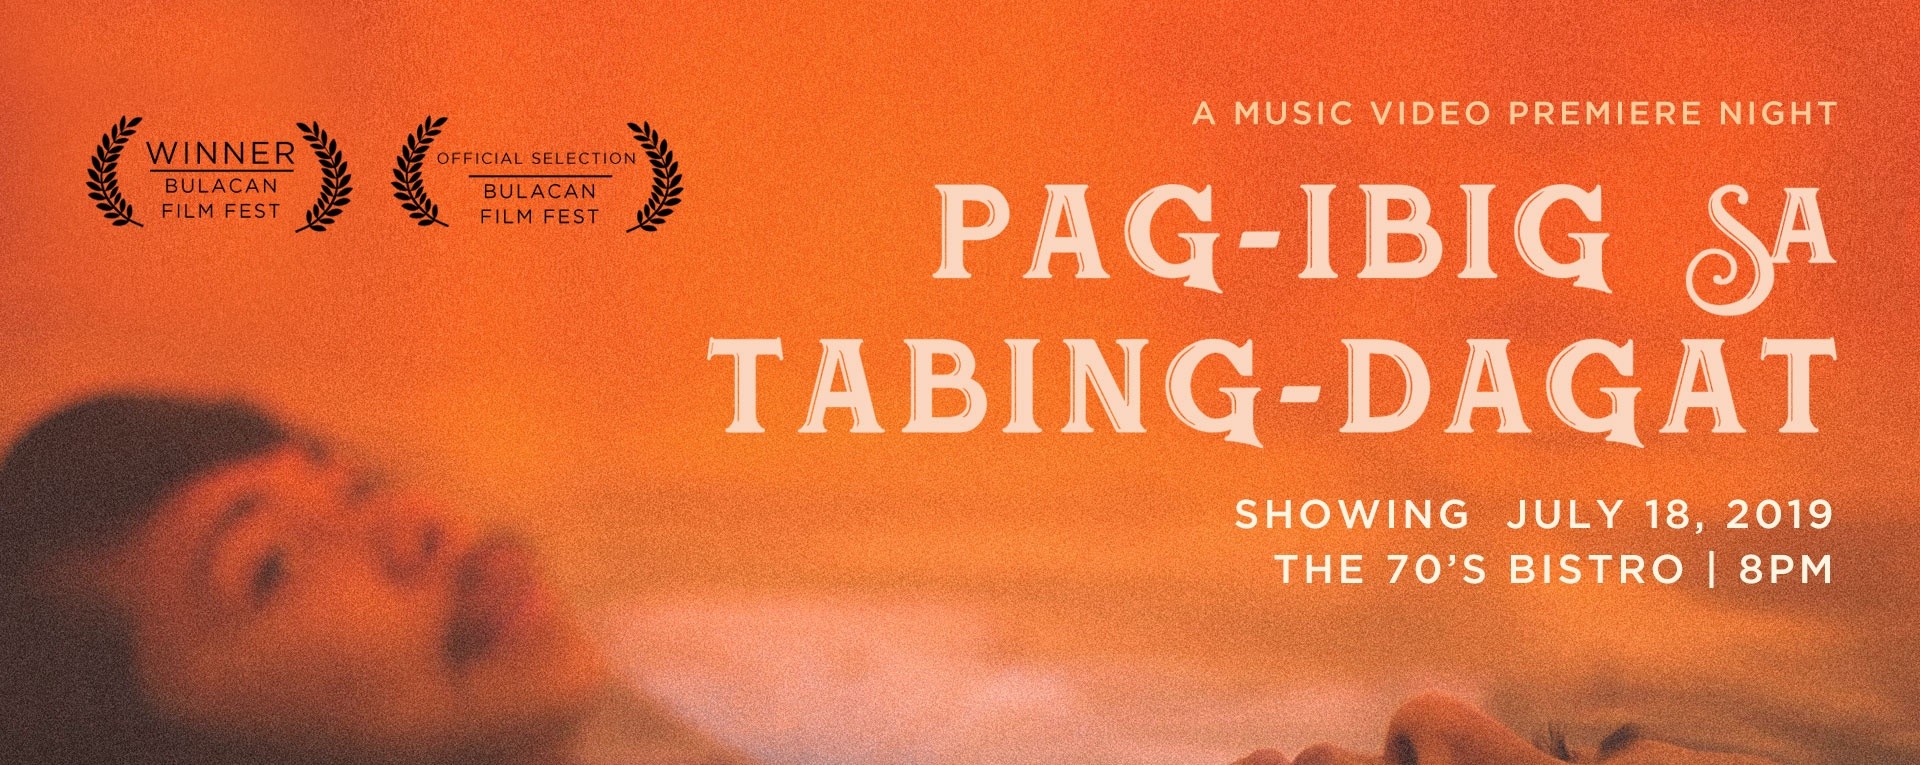 Pag-ibig Sa Tabing-Dagat Music Video Premiere Night